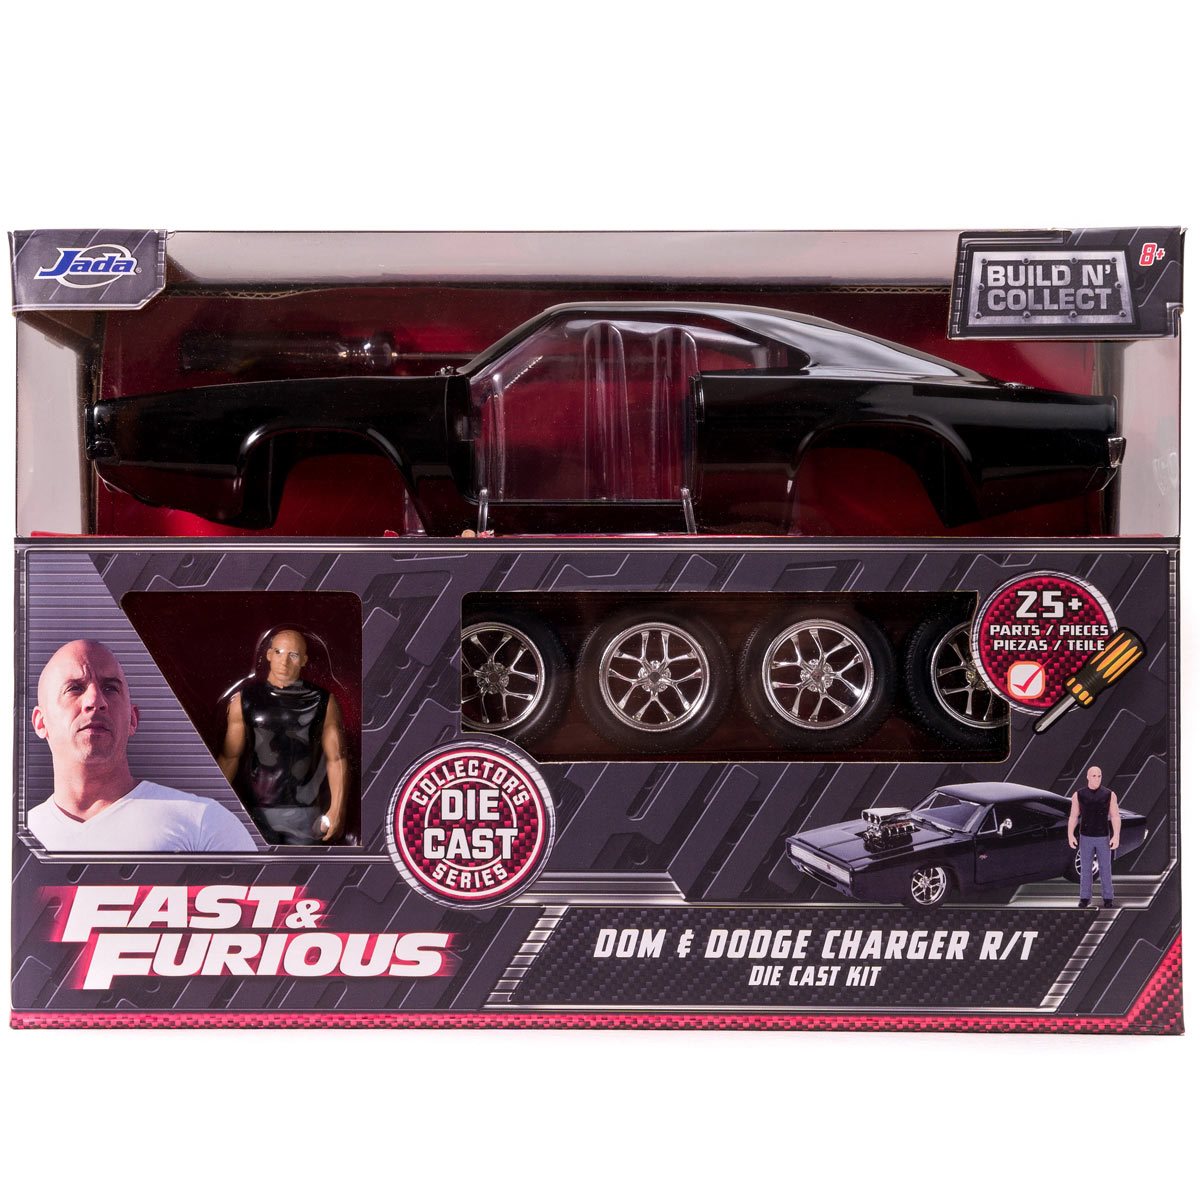 miniature Fast & Furious Dodge Charger (Street), échelle 1:24